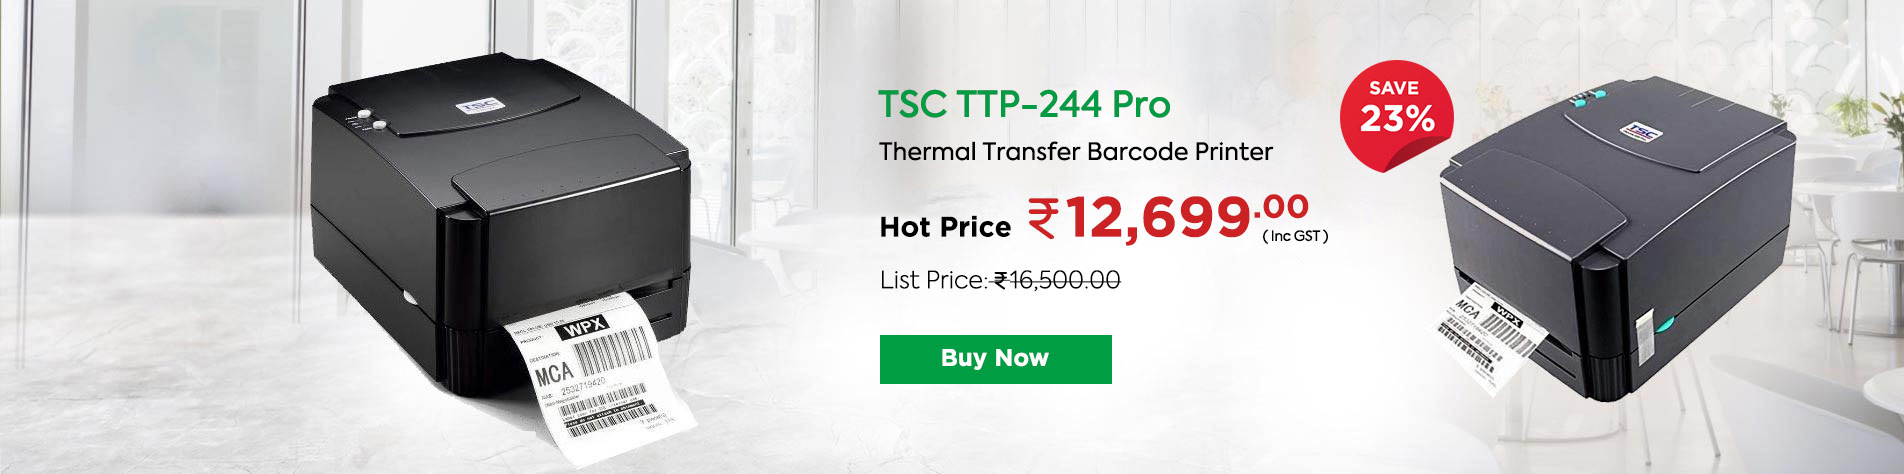 TSC TTP-244 Pro Thermal Transfer Barcode Printer